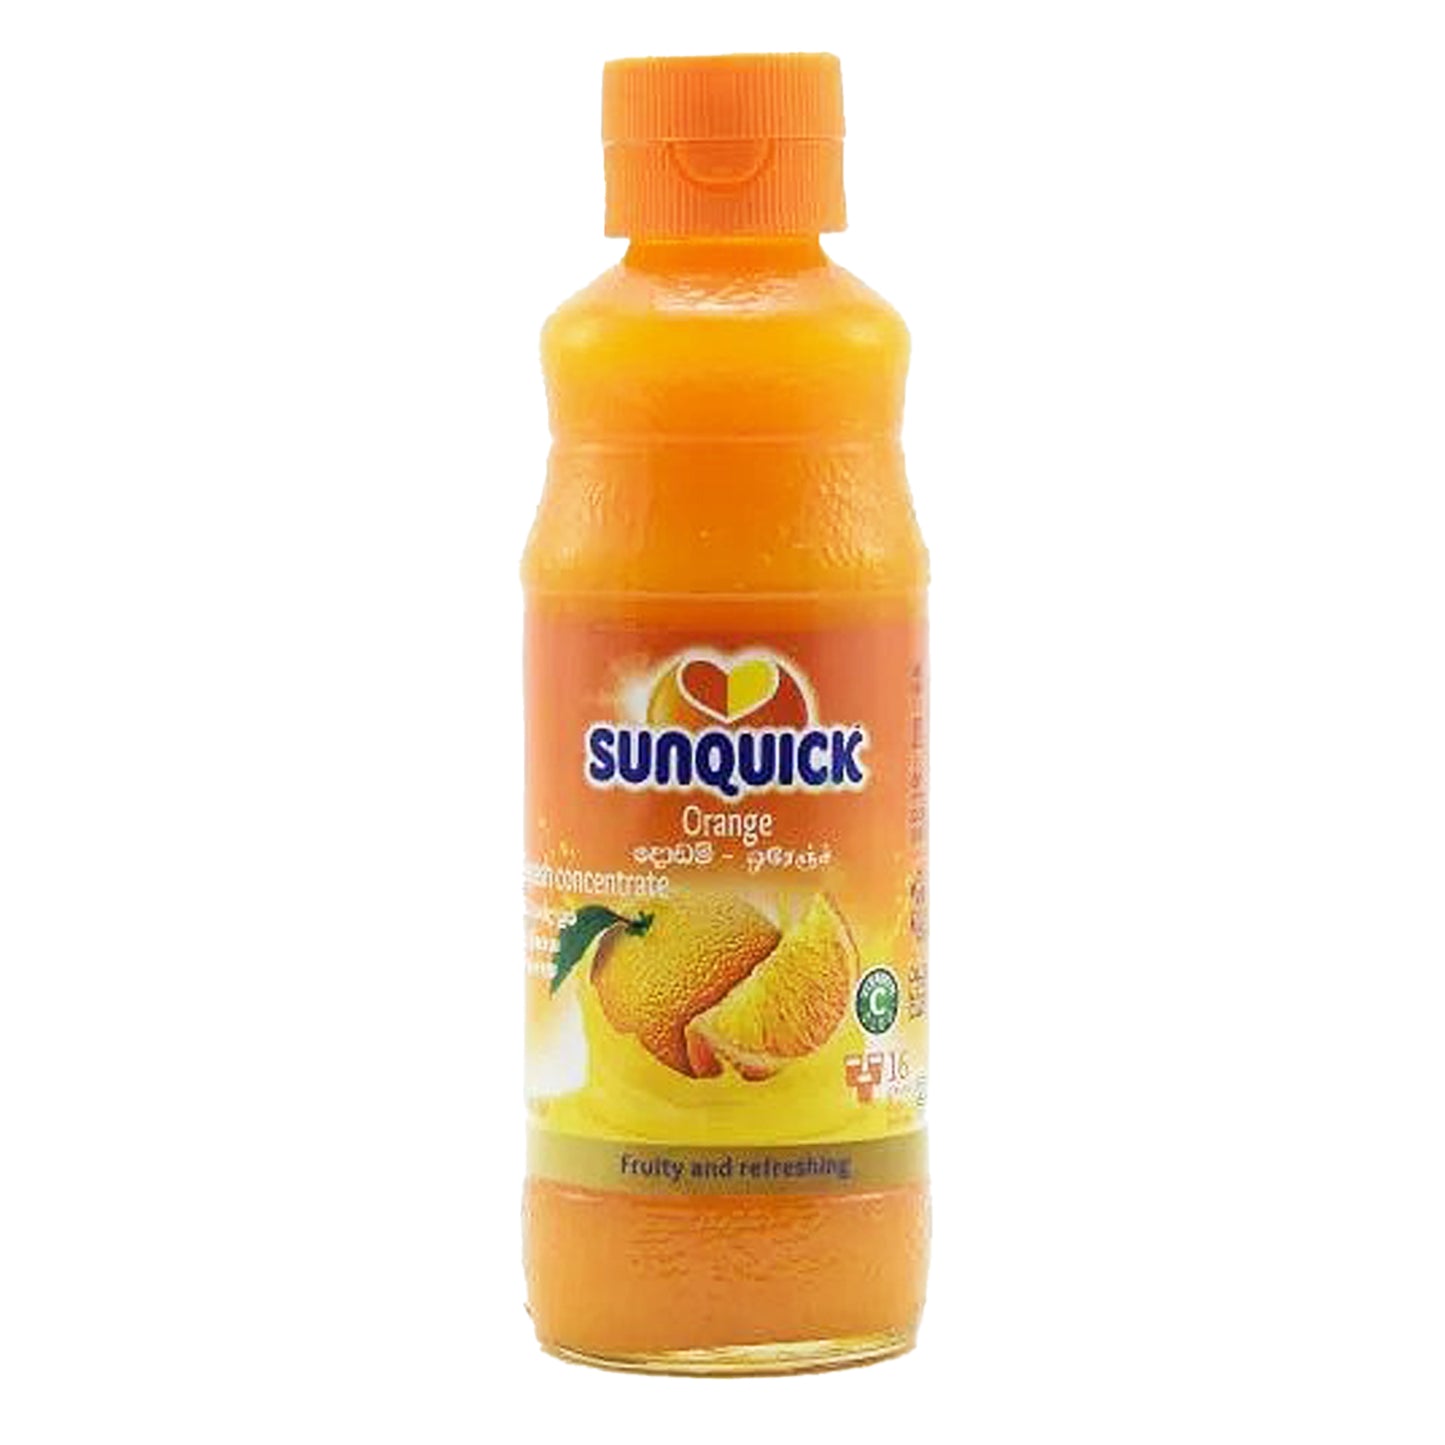 Sunquick Orange (330 ml)